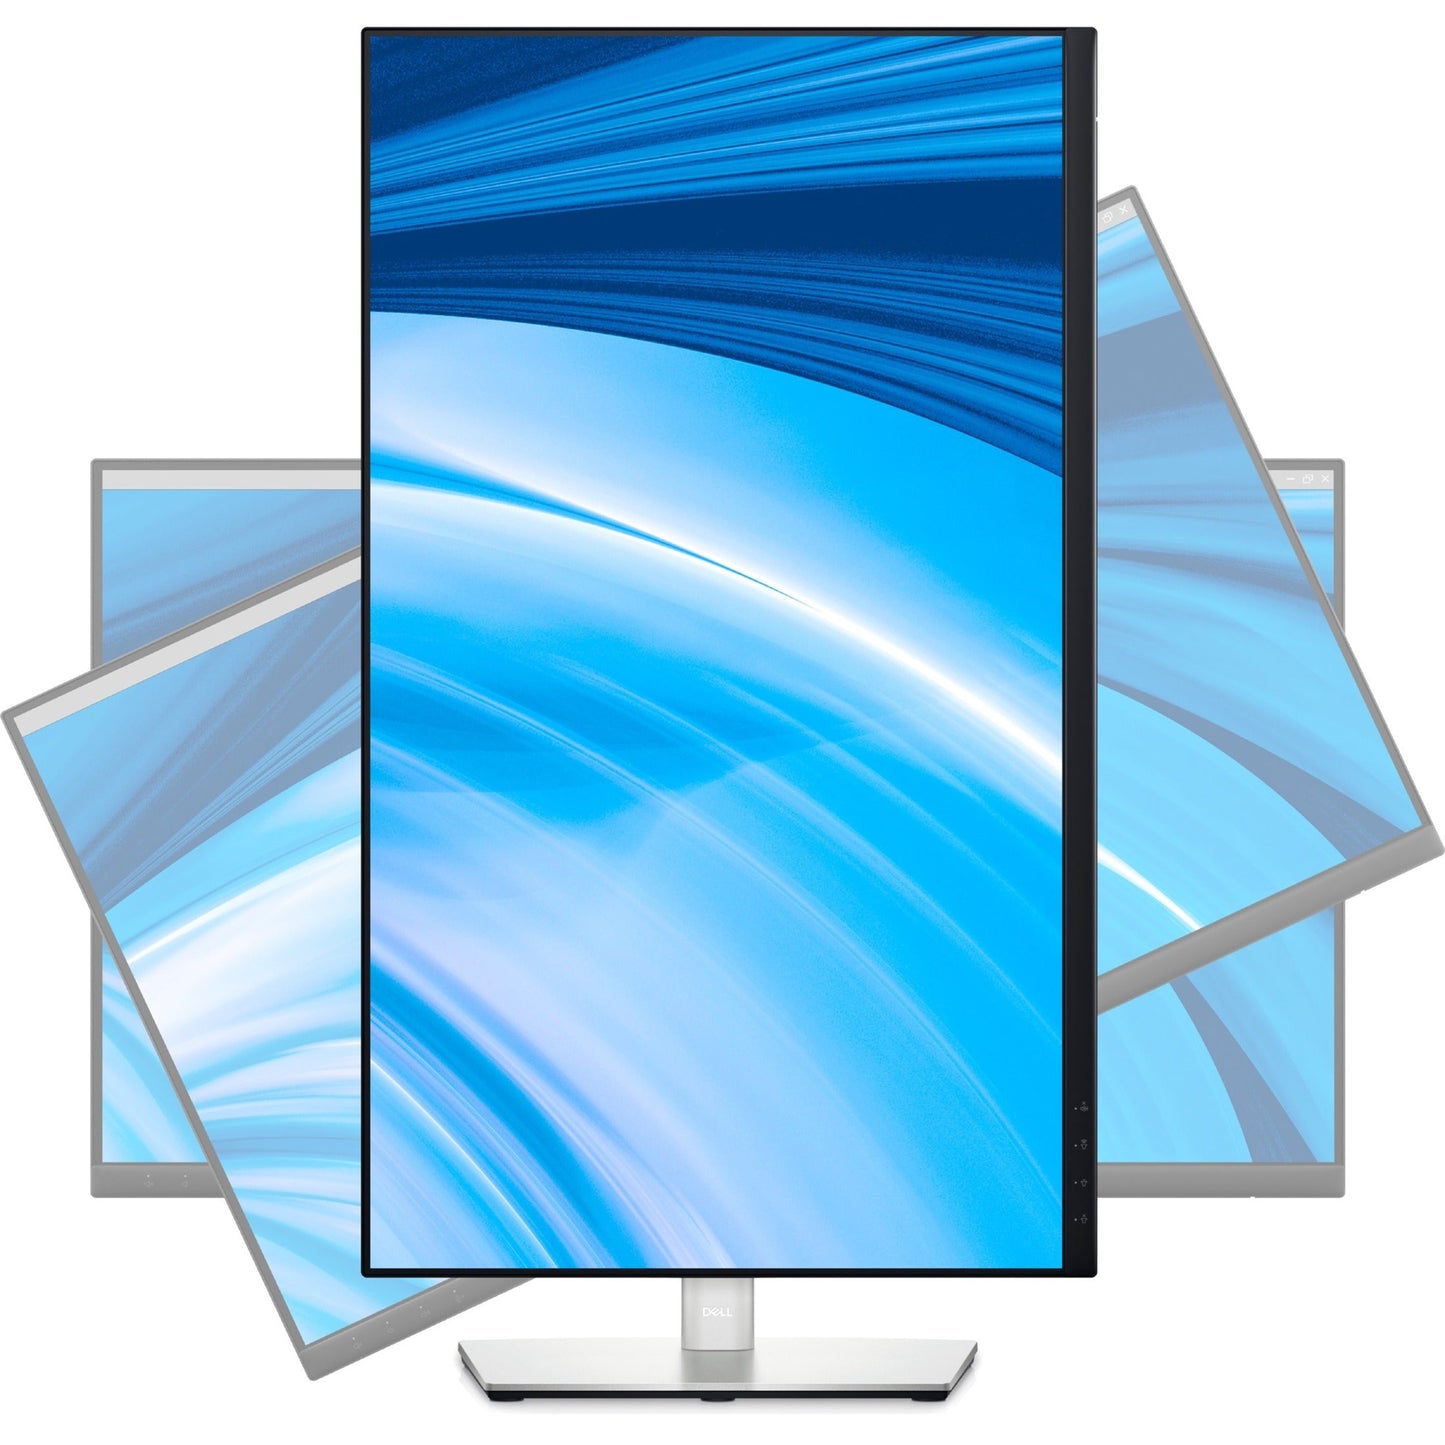 Dell C2723H 27" Full HD LCD Monitor - 16:9 - Black Silver